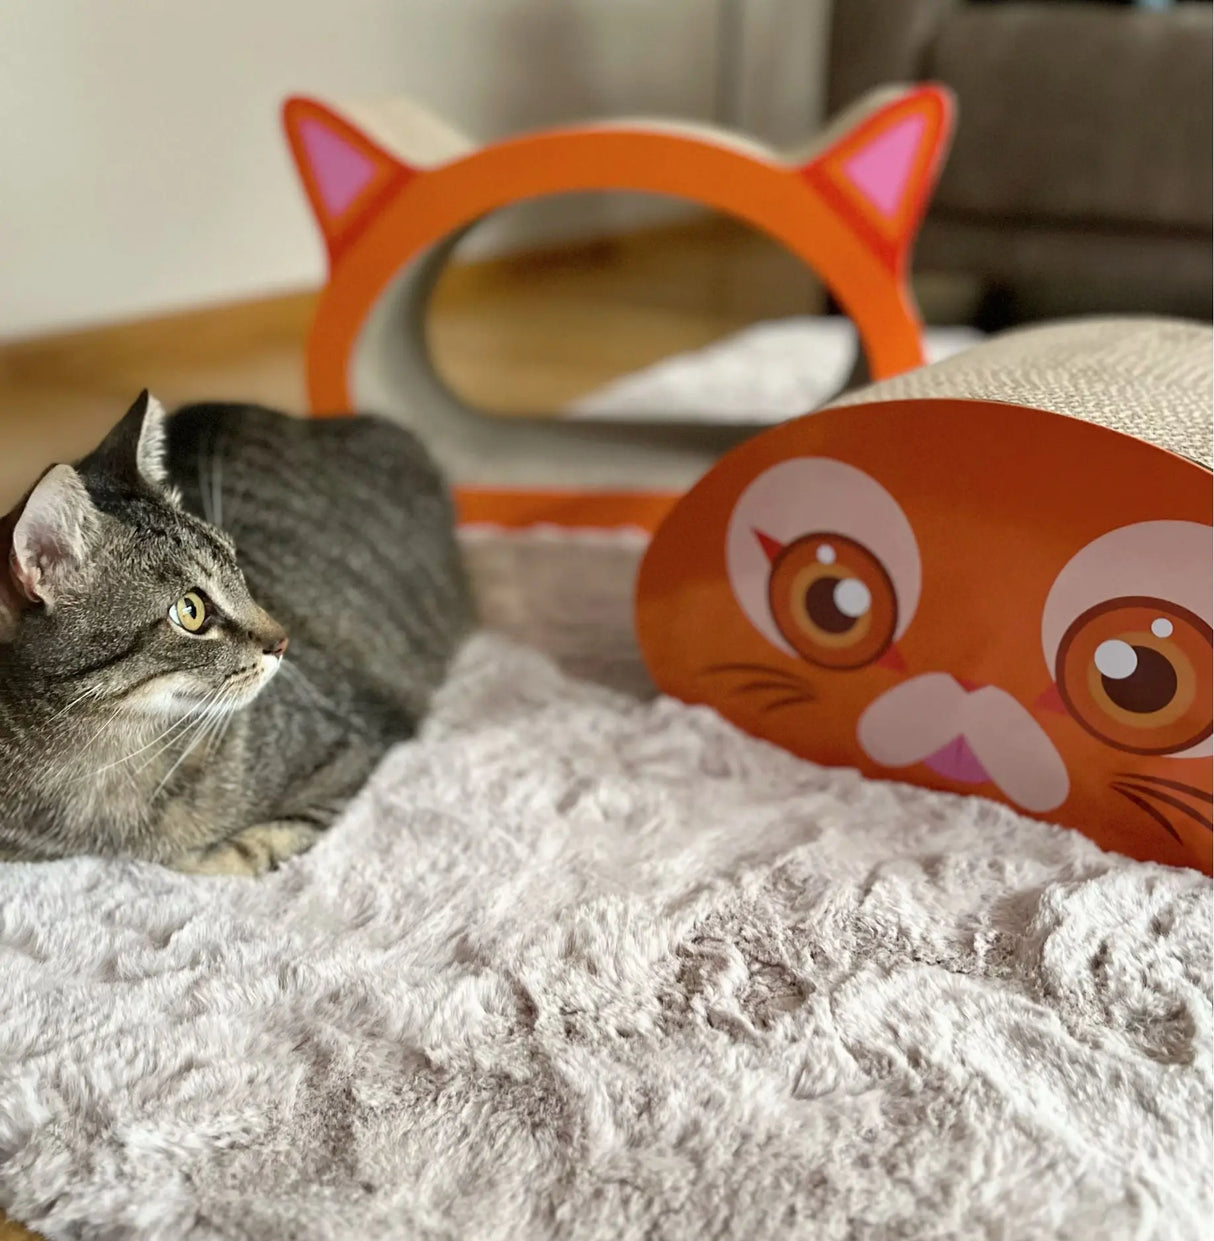 SpirePets Katten krabmat krabmeubel | katten krabplank | Katten speelmeubilair SPIRE-PETS